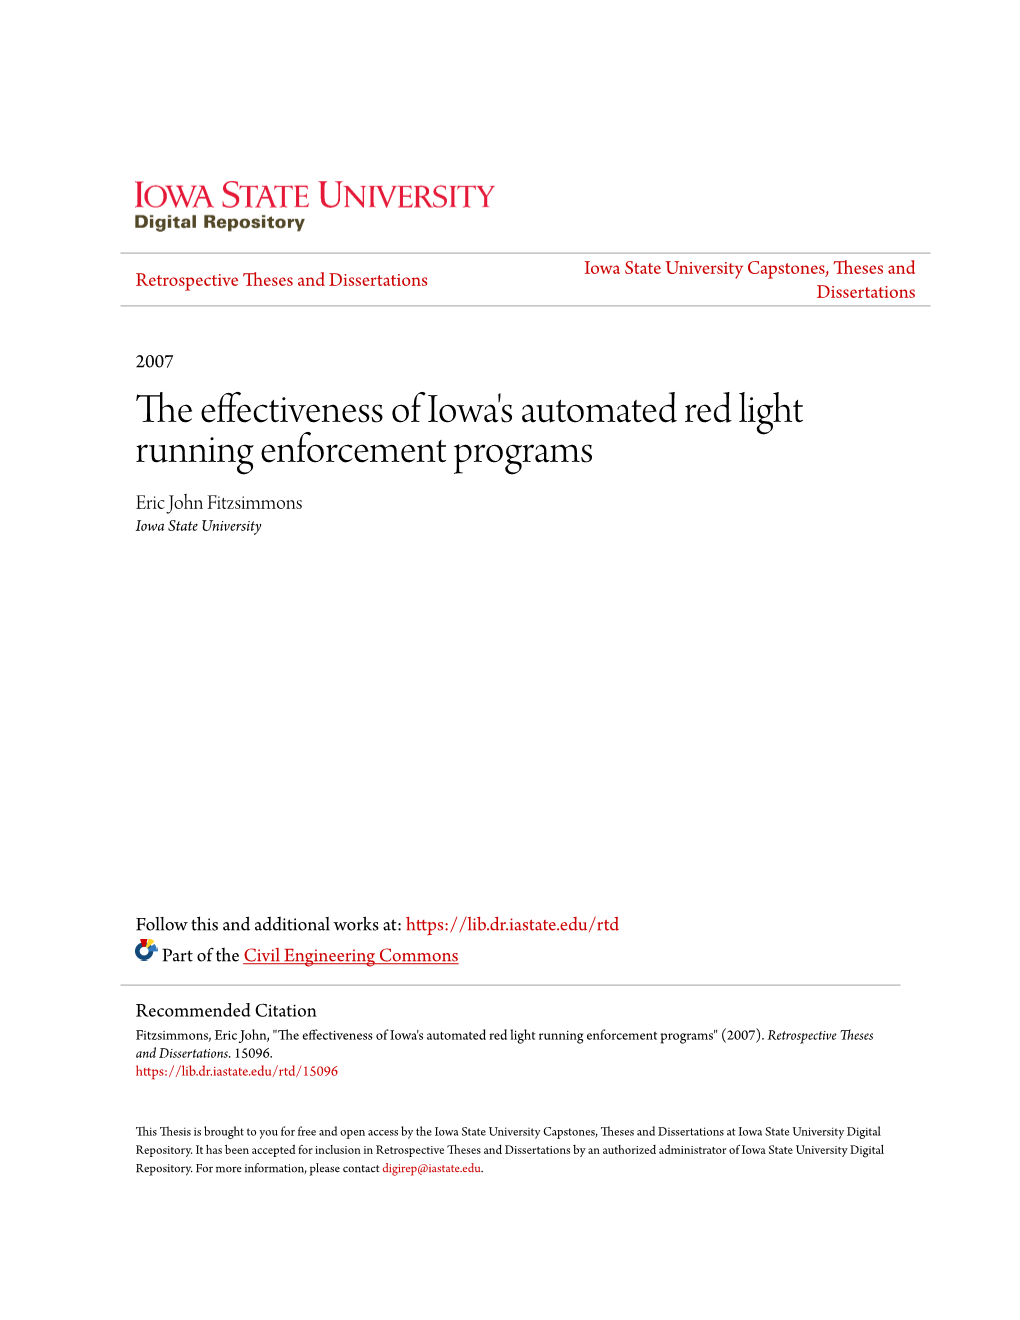 The Effectiveness of Iowa's Automated Red Light Running Enforcement Programs Eric John Fitzsimmons Iowa State University